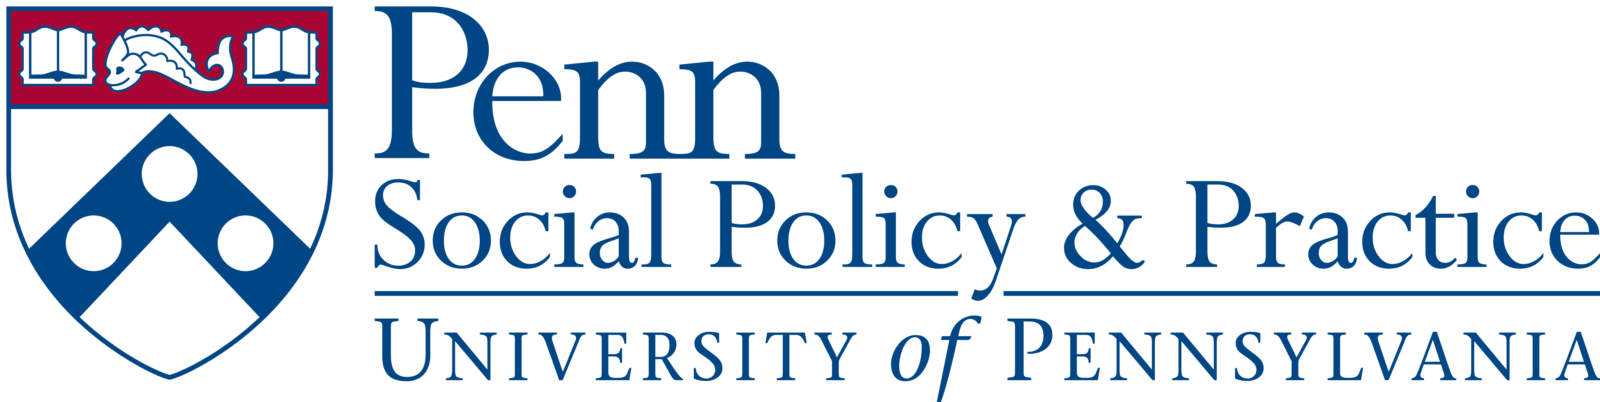 Femida Handy, PhD - School of Social Policy & Practice